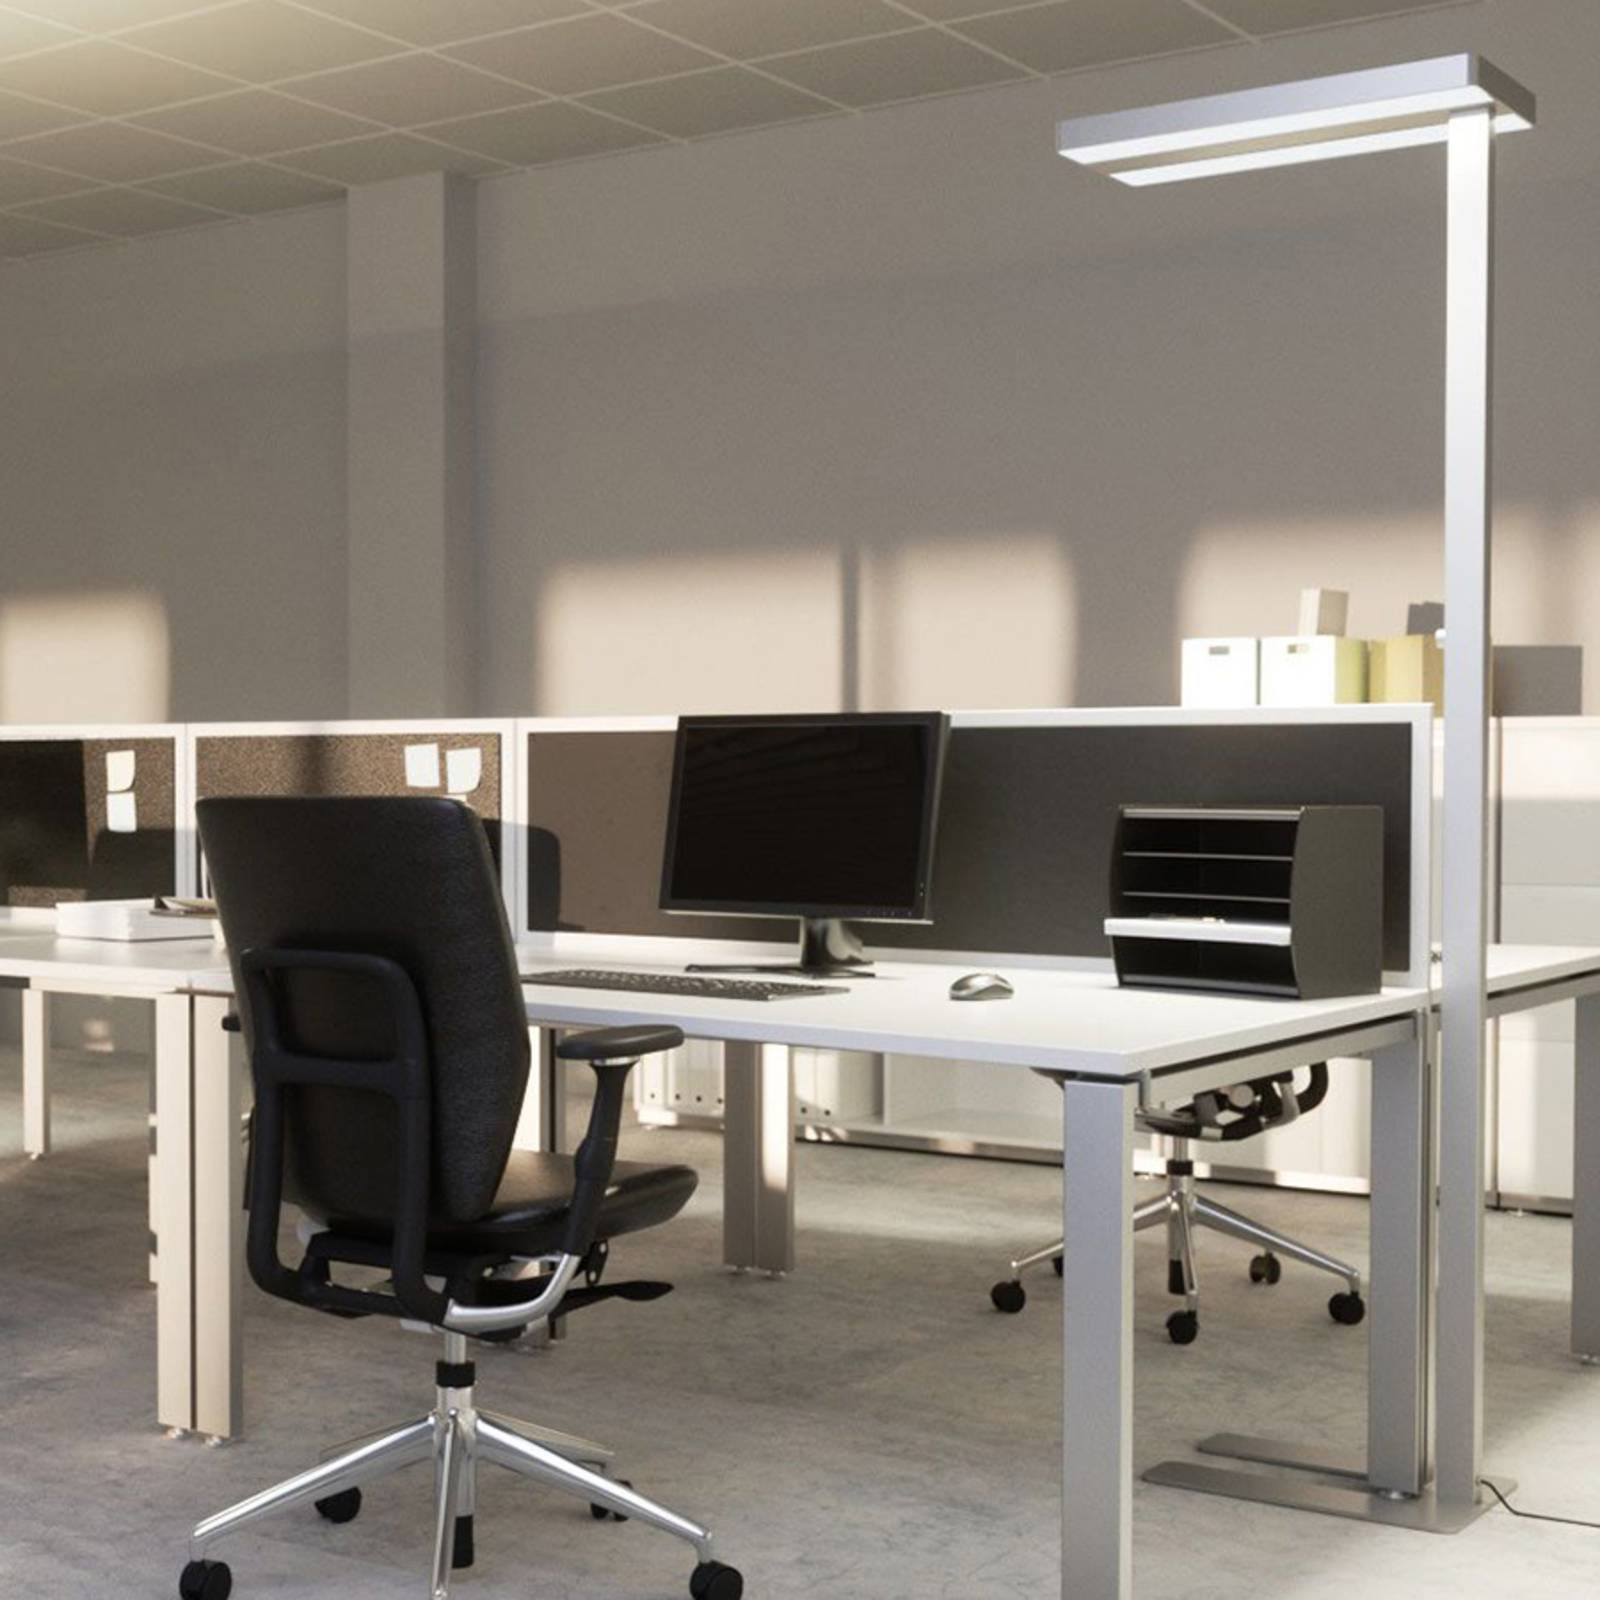 Arcchio Logan - LED-Büro-Stehlampe mit Dimmer